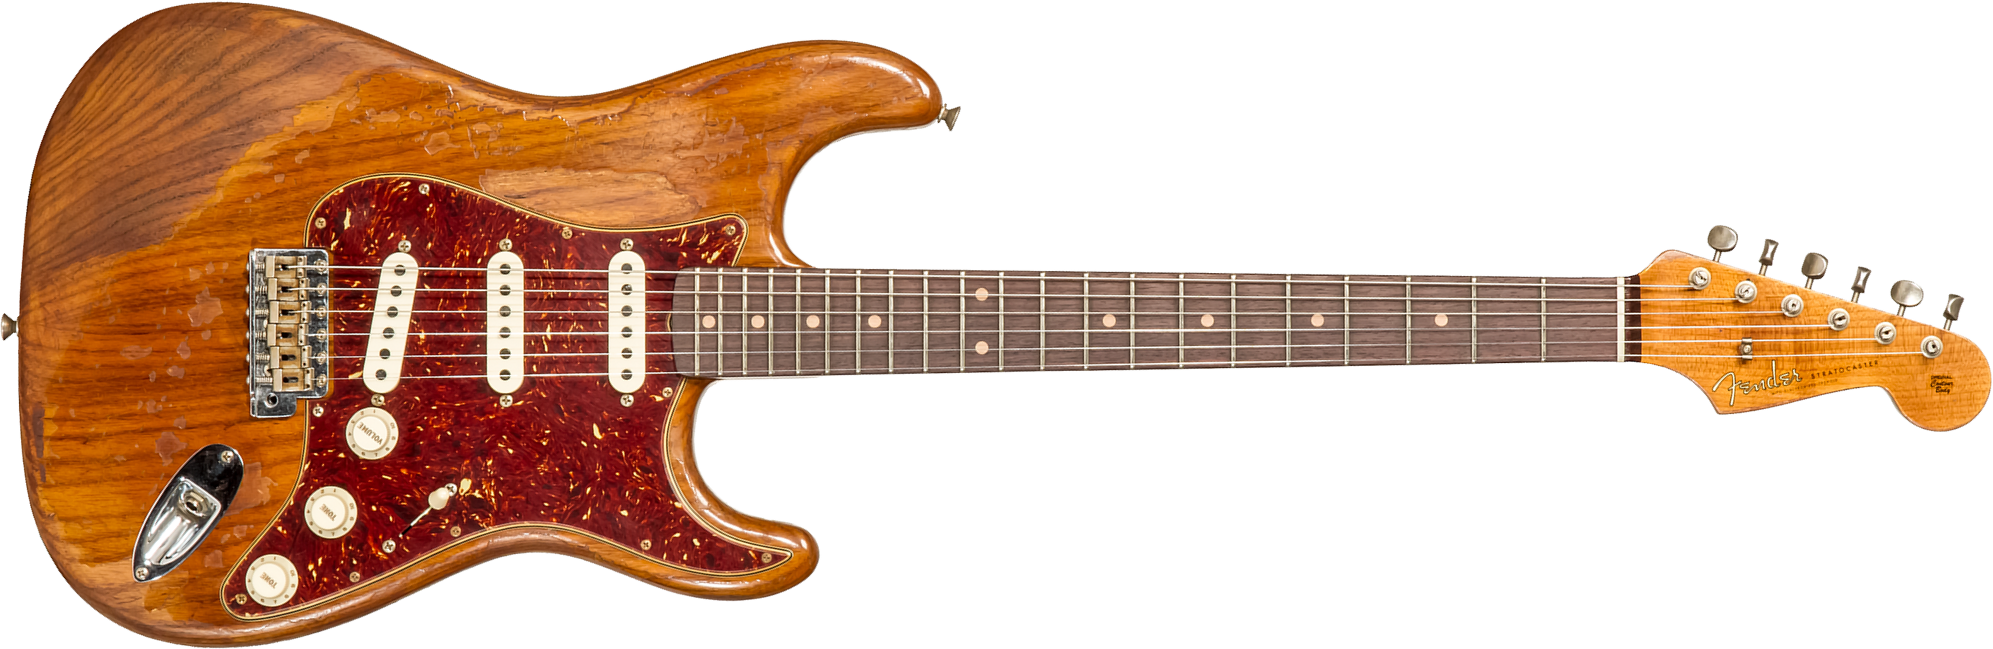 Fender Custom Shop Strat 1961 3s Trem Rw #cz570266 - Super Heavy Relic Natural - Str shape electric guitar - Main picture